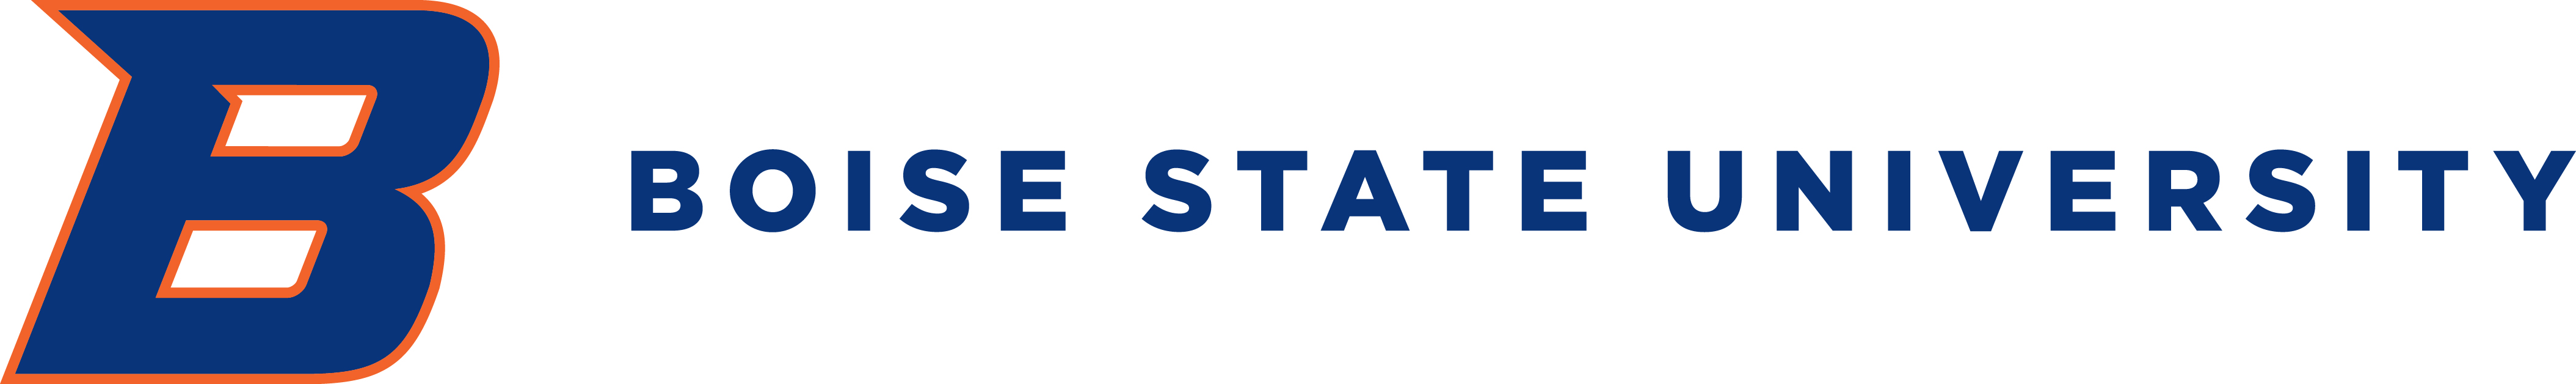 Boise State logo - horizontal